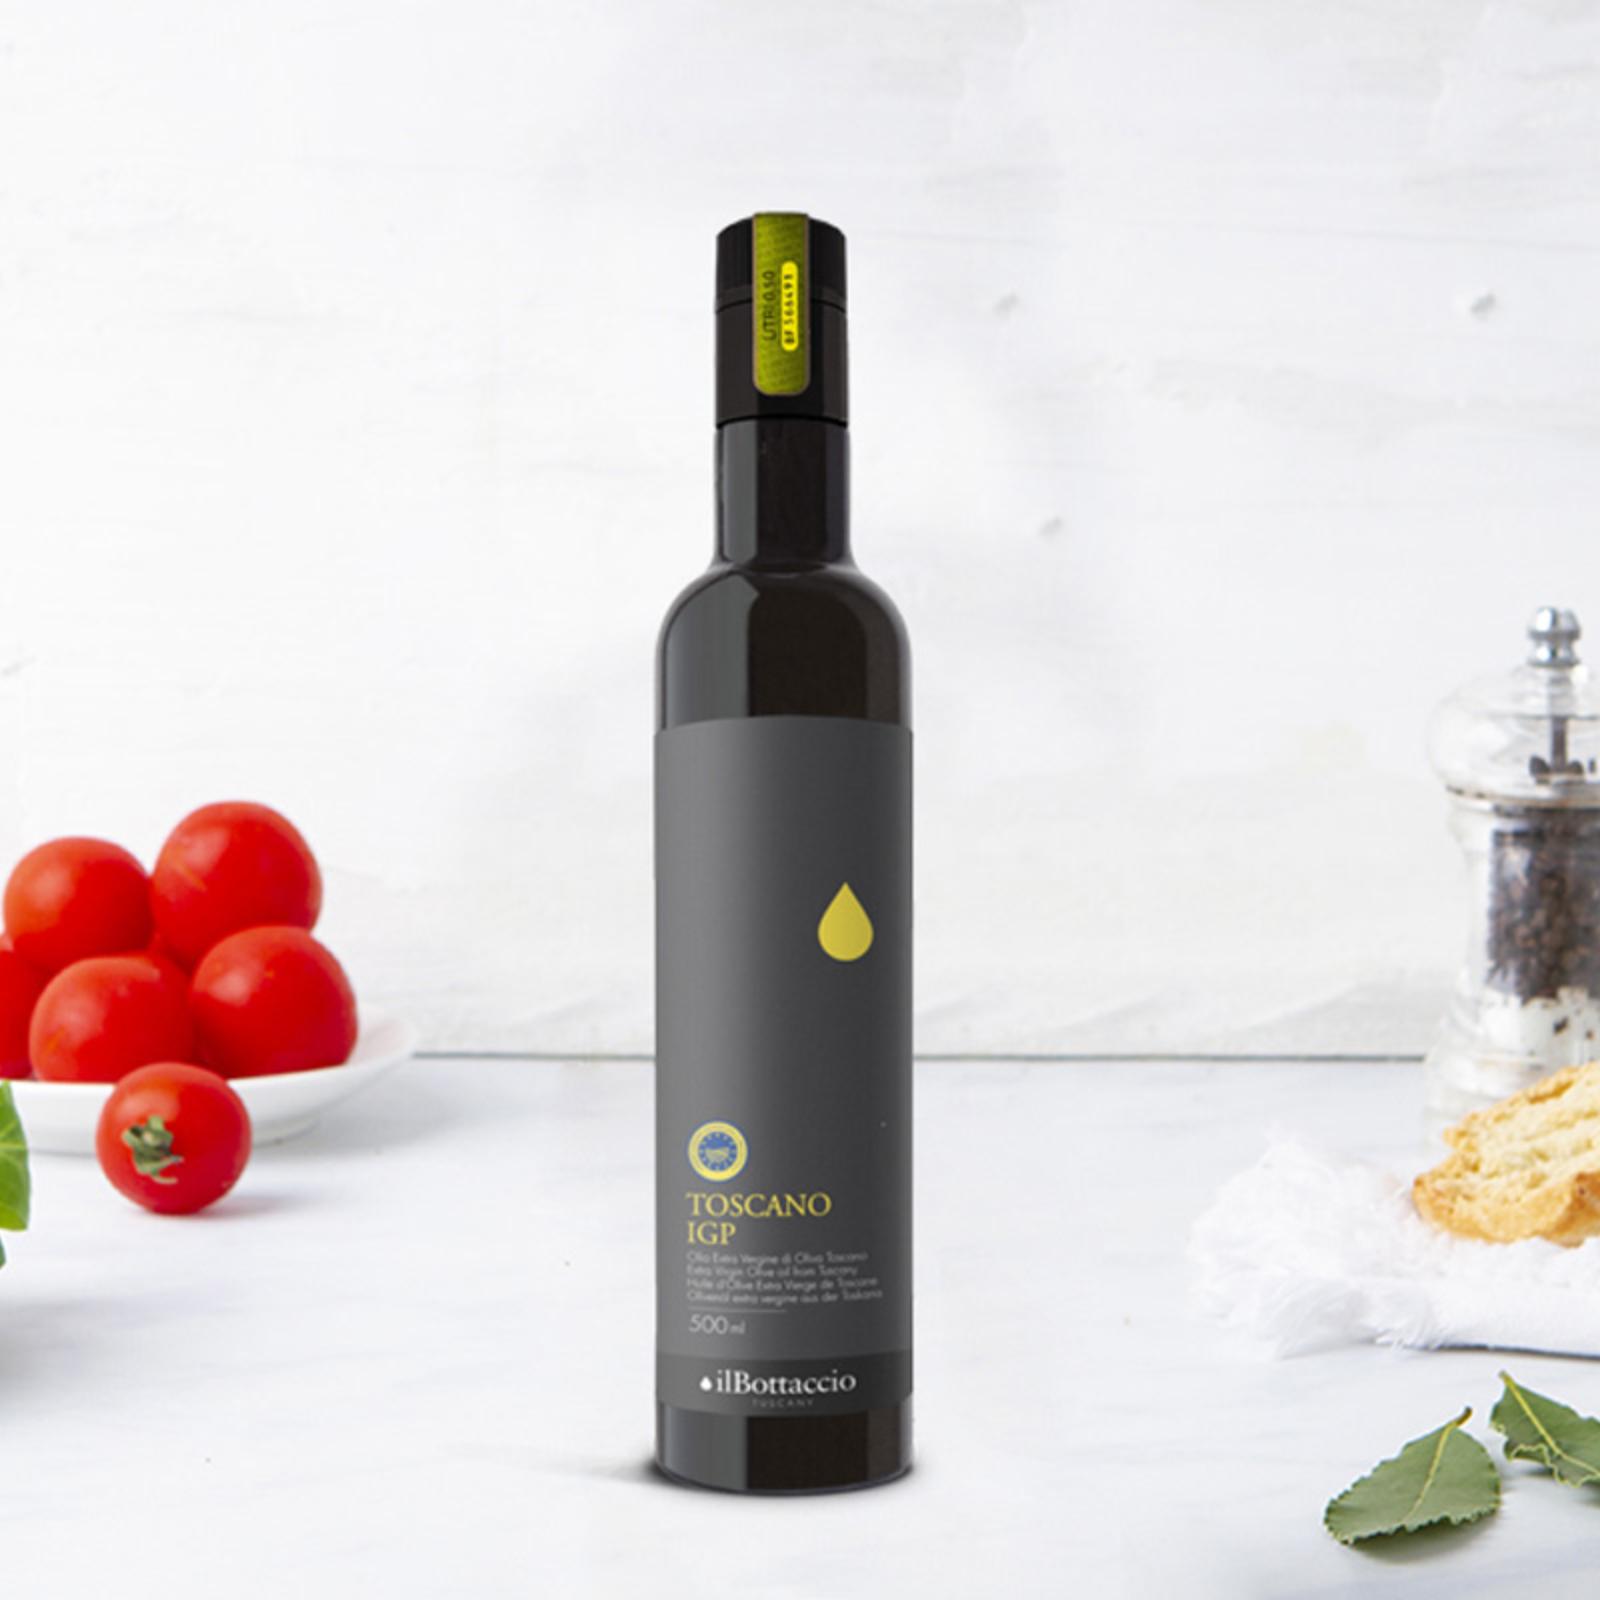 Toscano IGP olio extravergine d'oliva